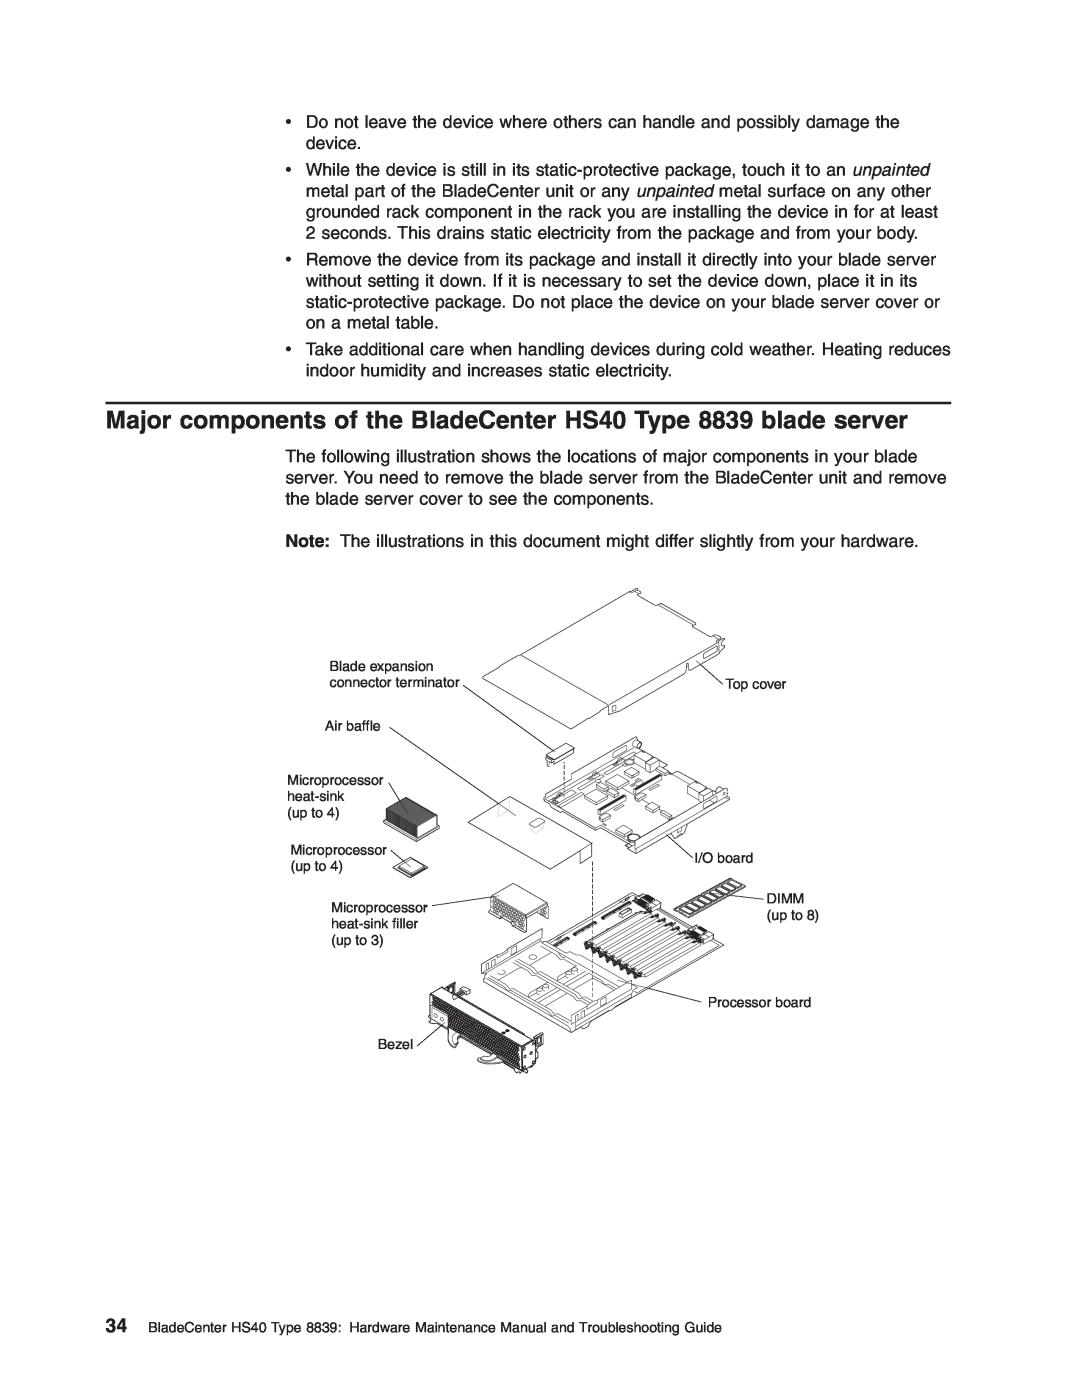 IBM Major components of the BladeCenter HS40 Type 8839 blade server, Blade expansion connector terminator Air baffle 